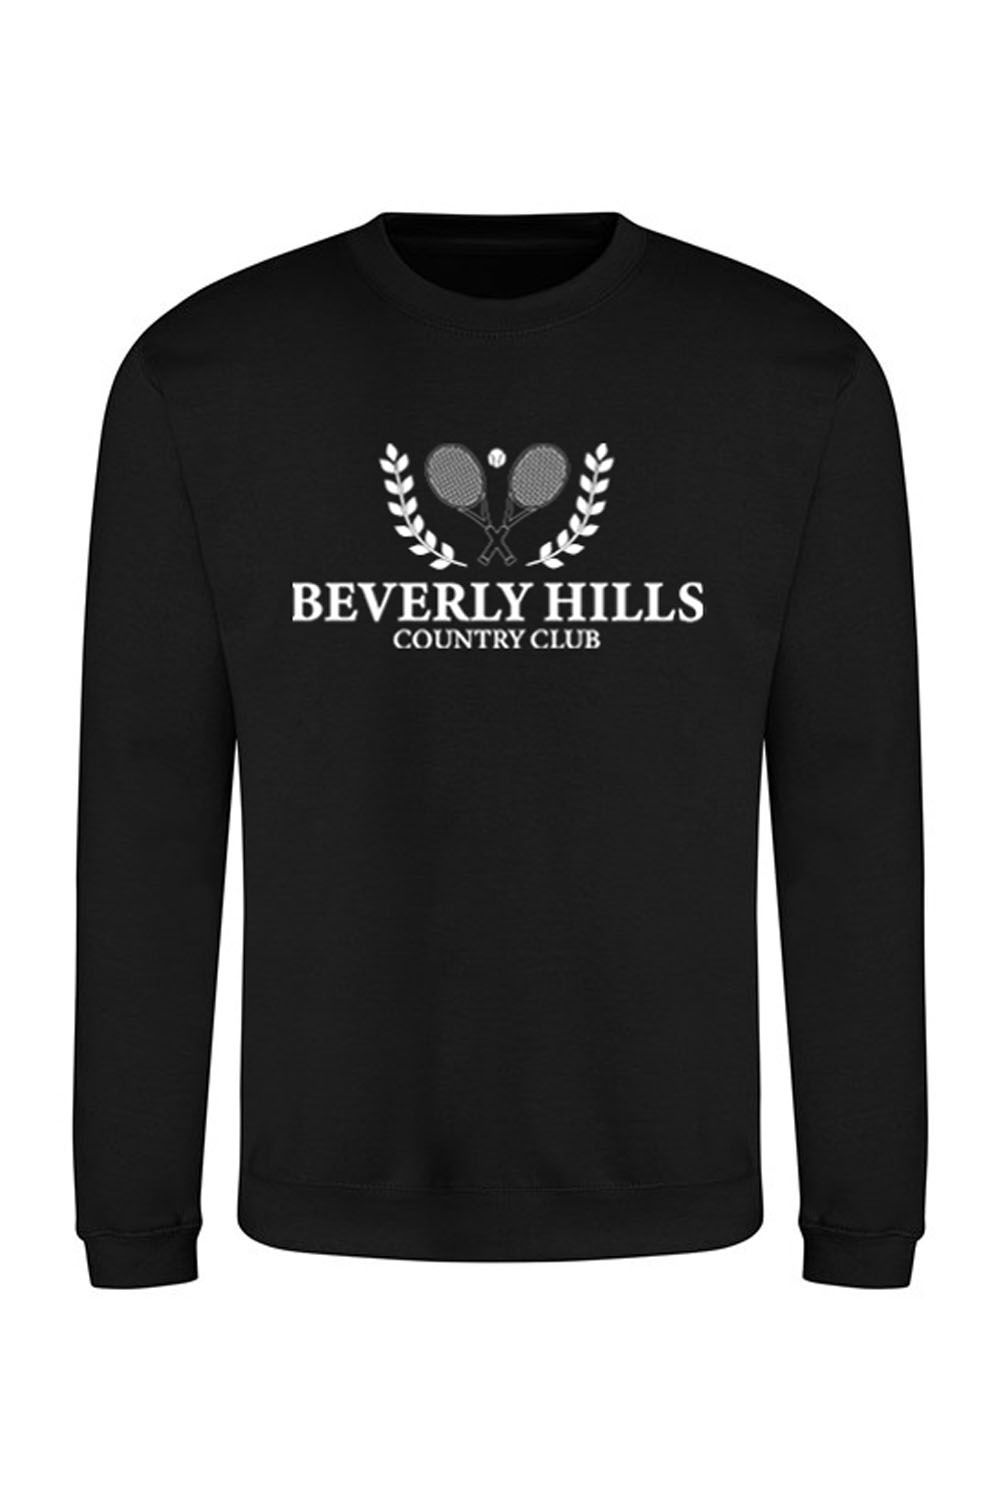 Beverly Hills Print Sweatshirt (Pack of 6)